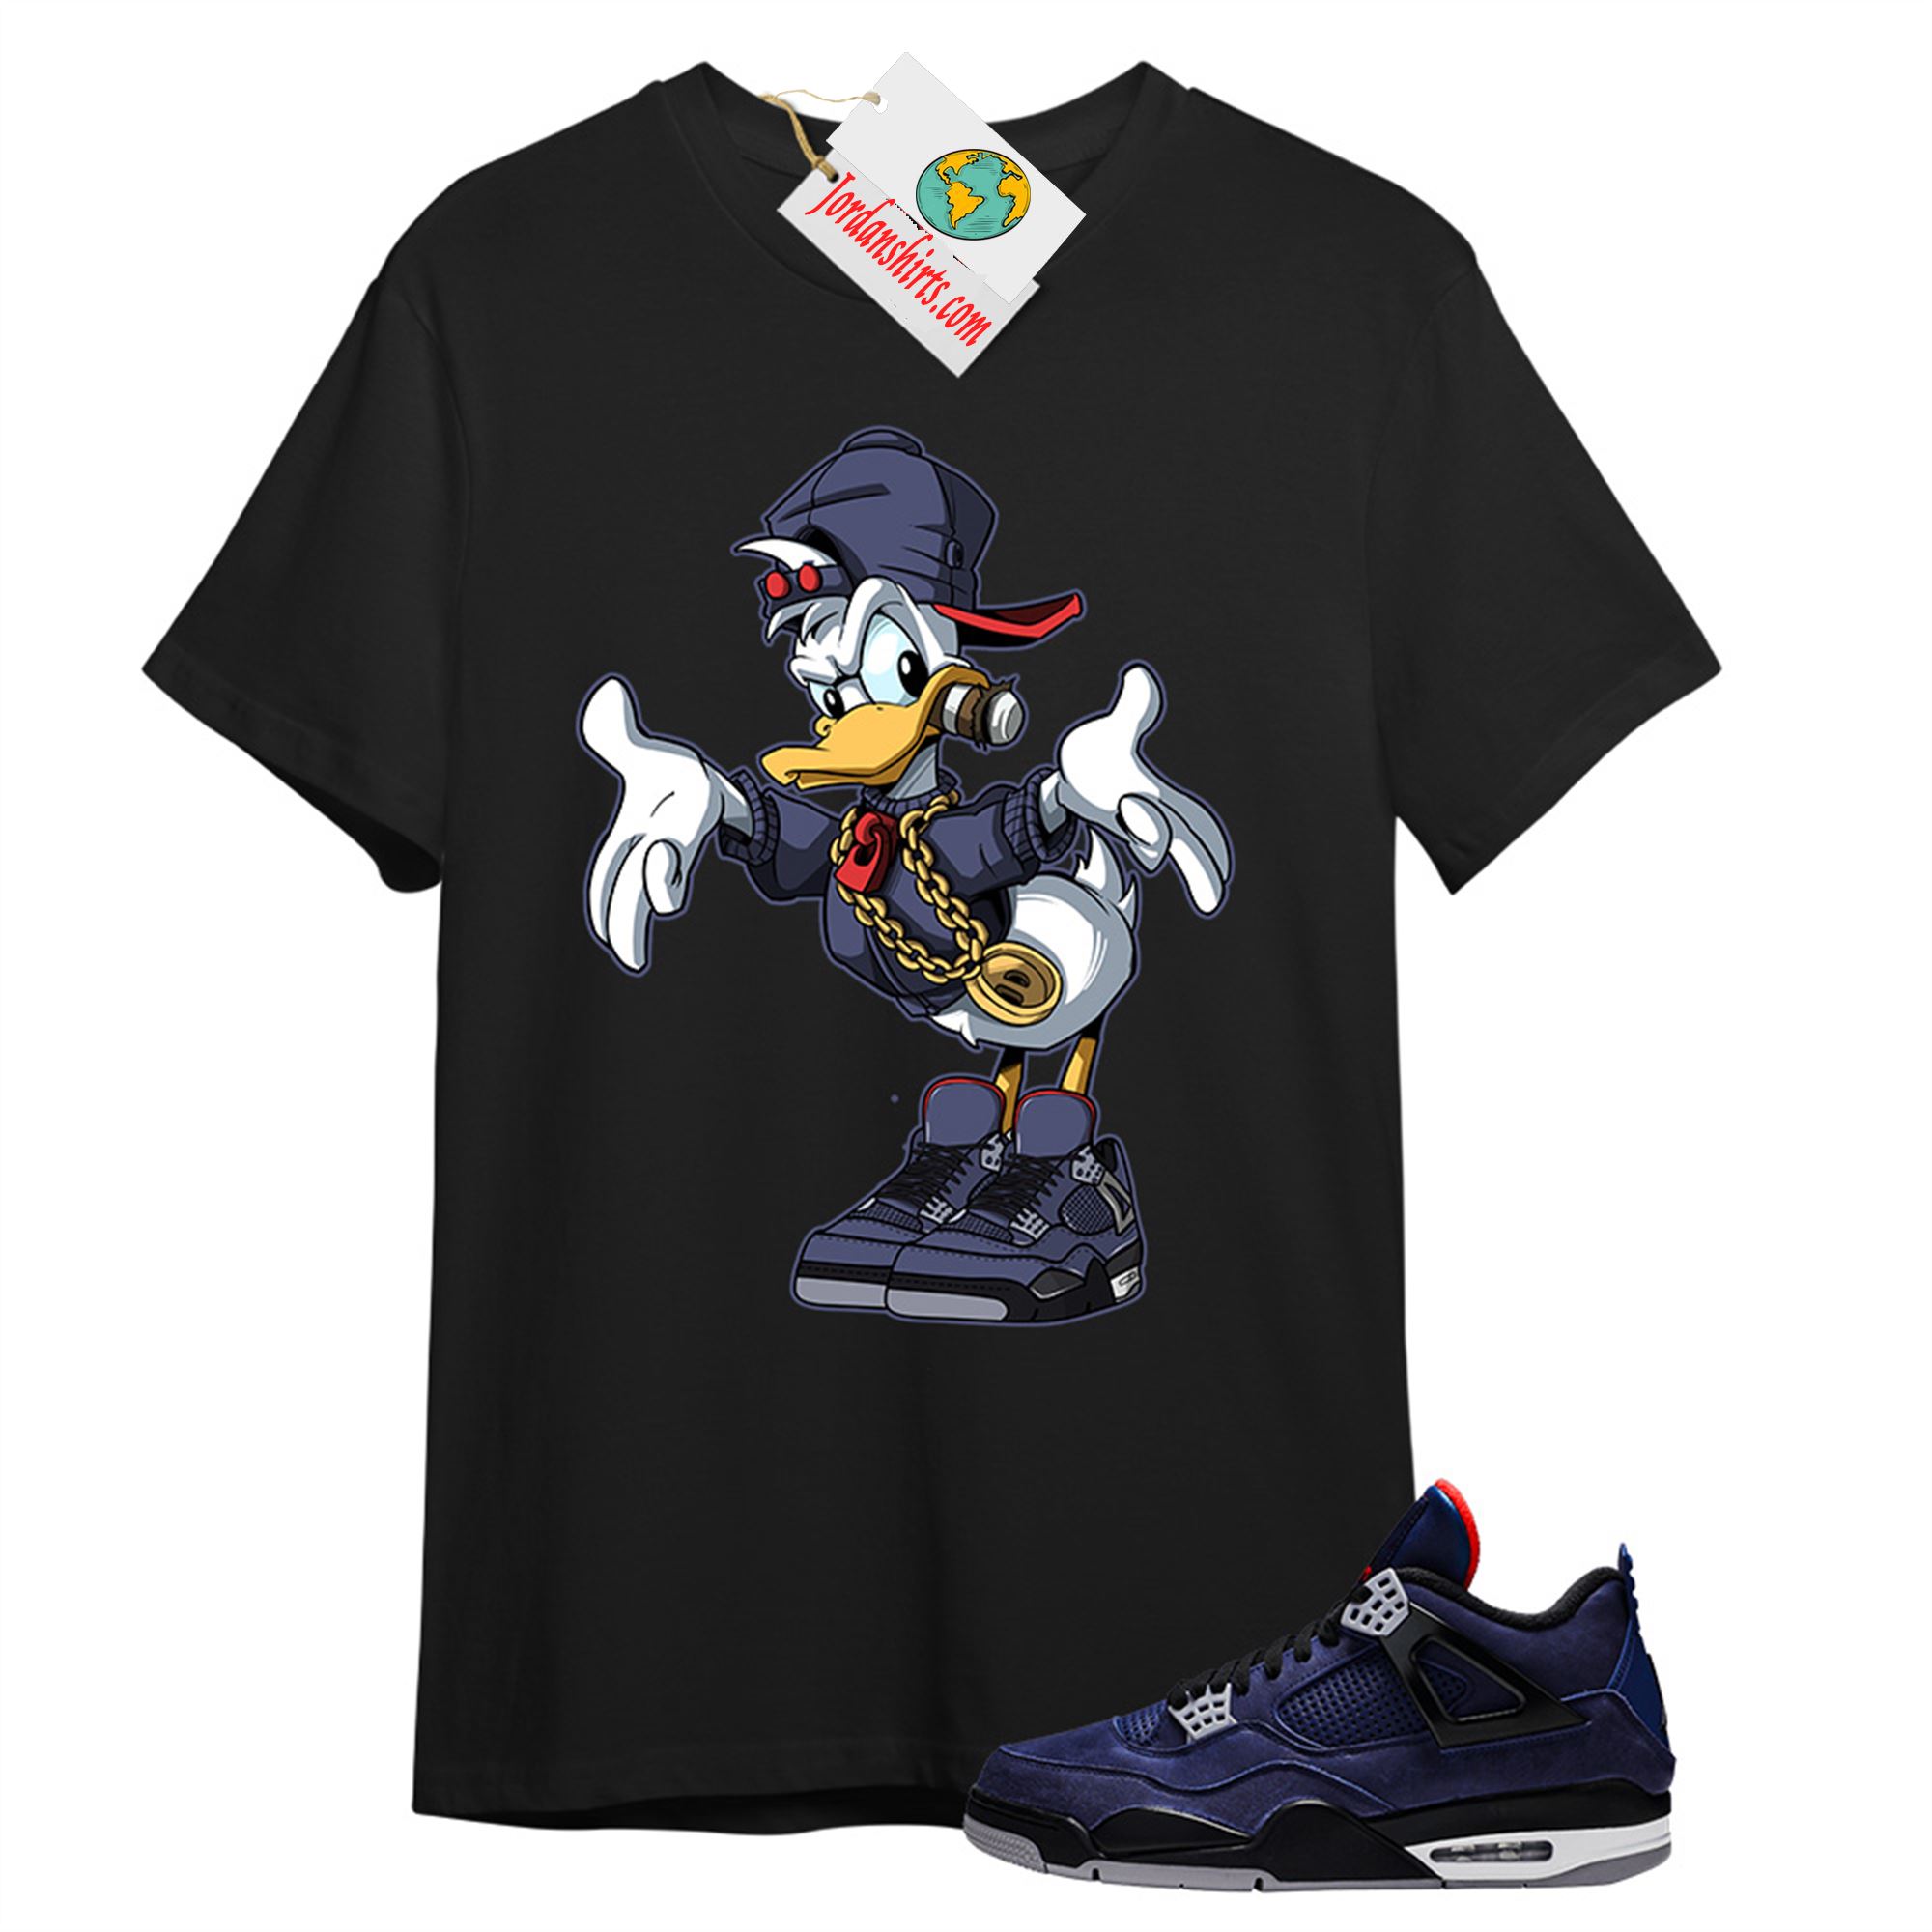 Jordan 4 Shirt, Donald Duck Black T-shirt Air Jordan 4 Winter Loyal Blue 4s Size Up To 5xl